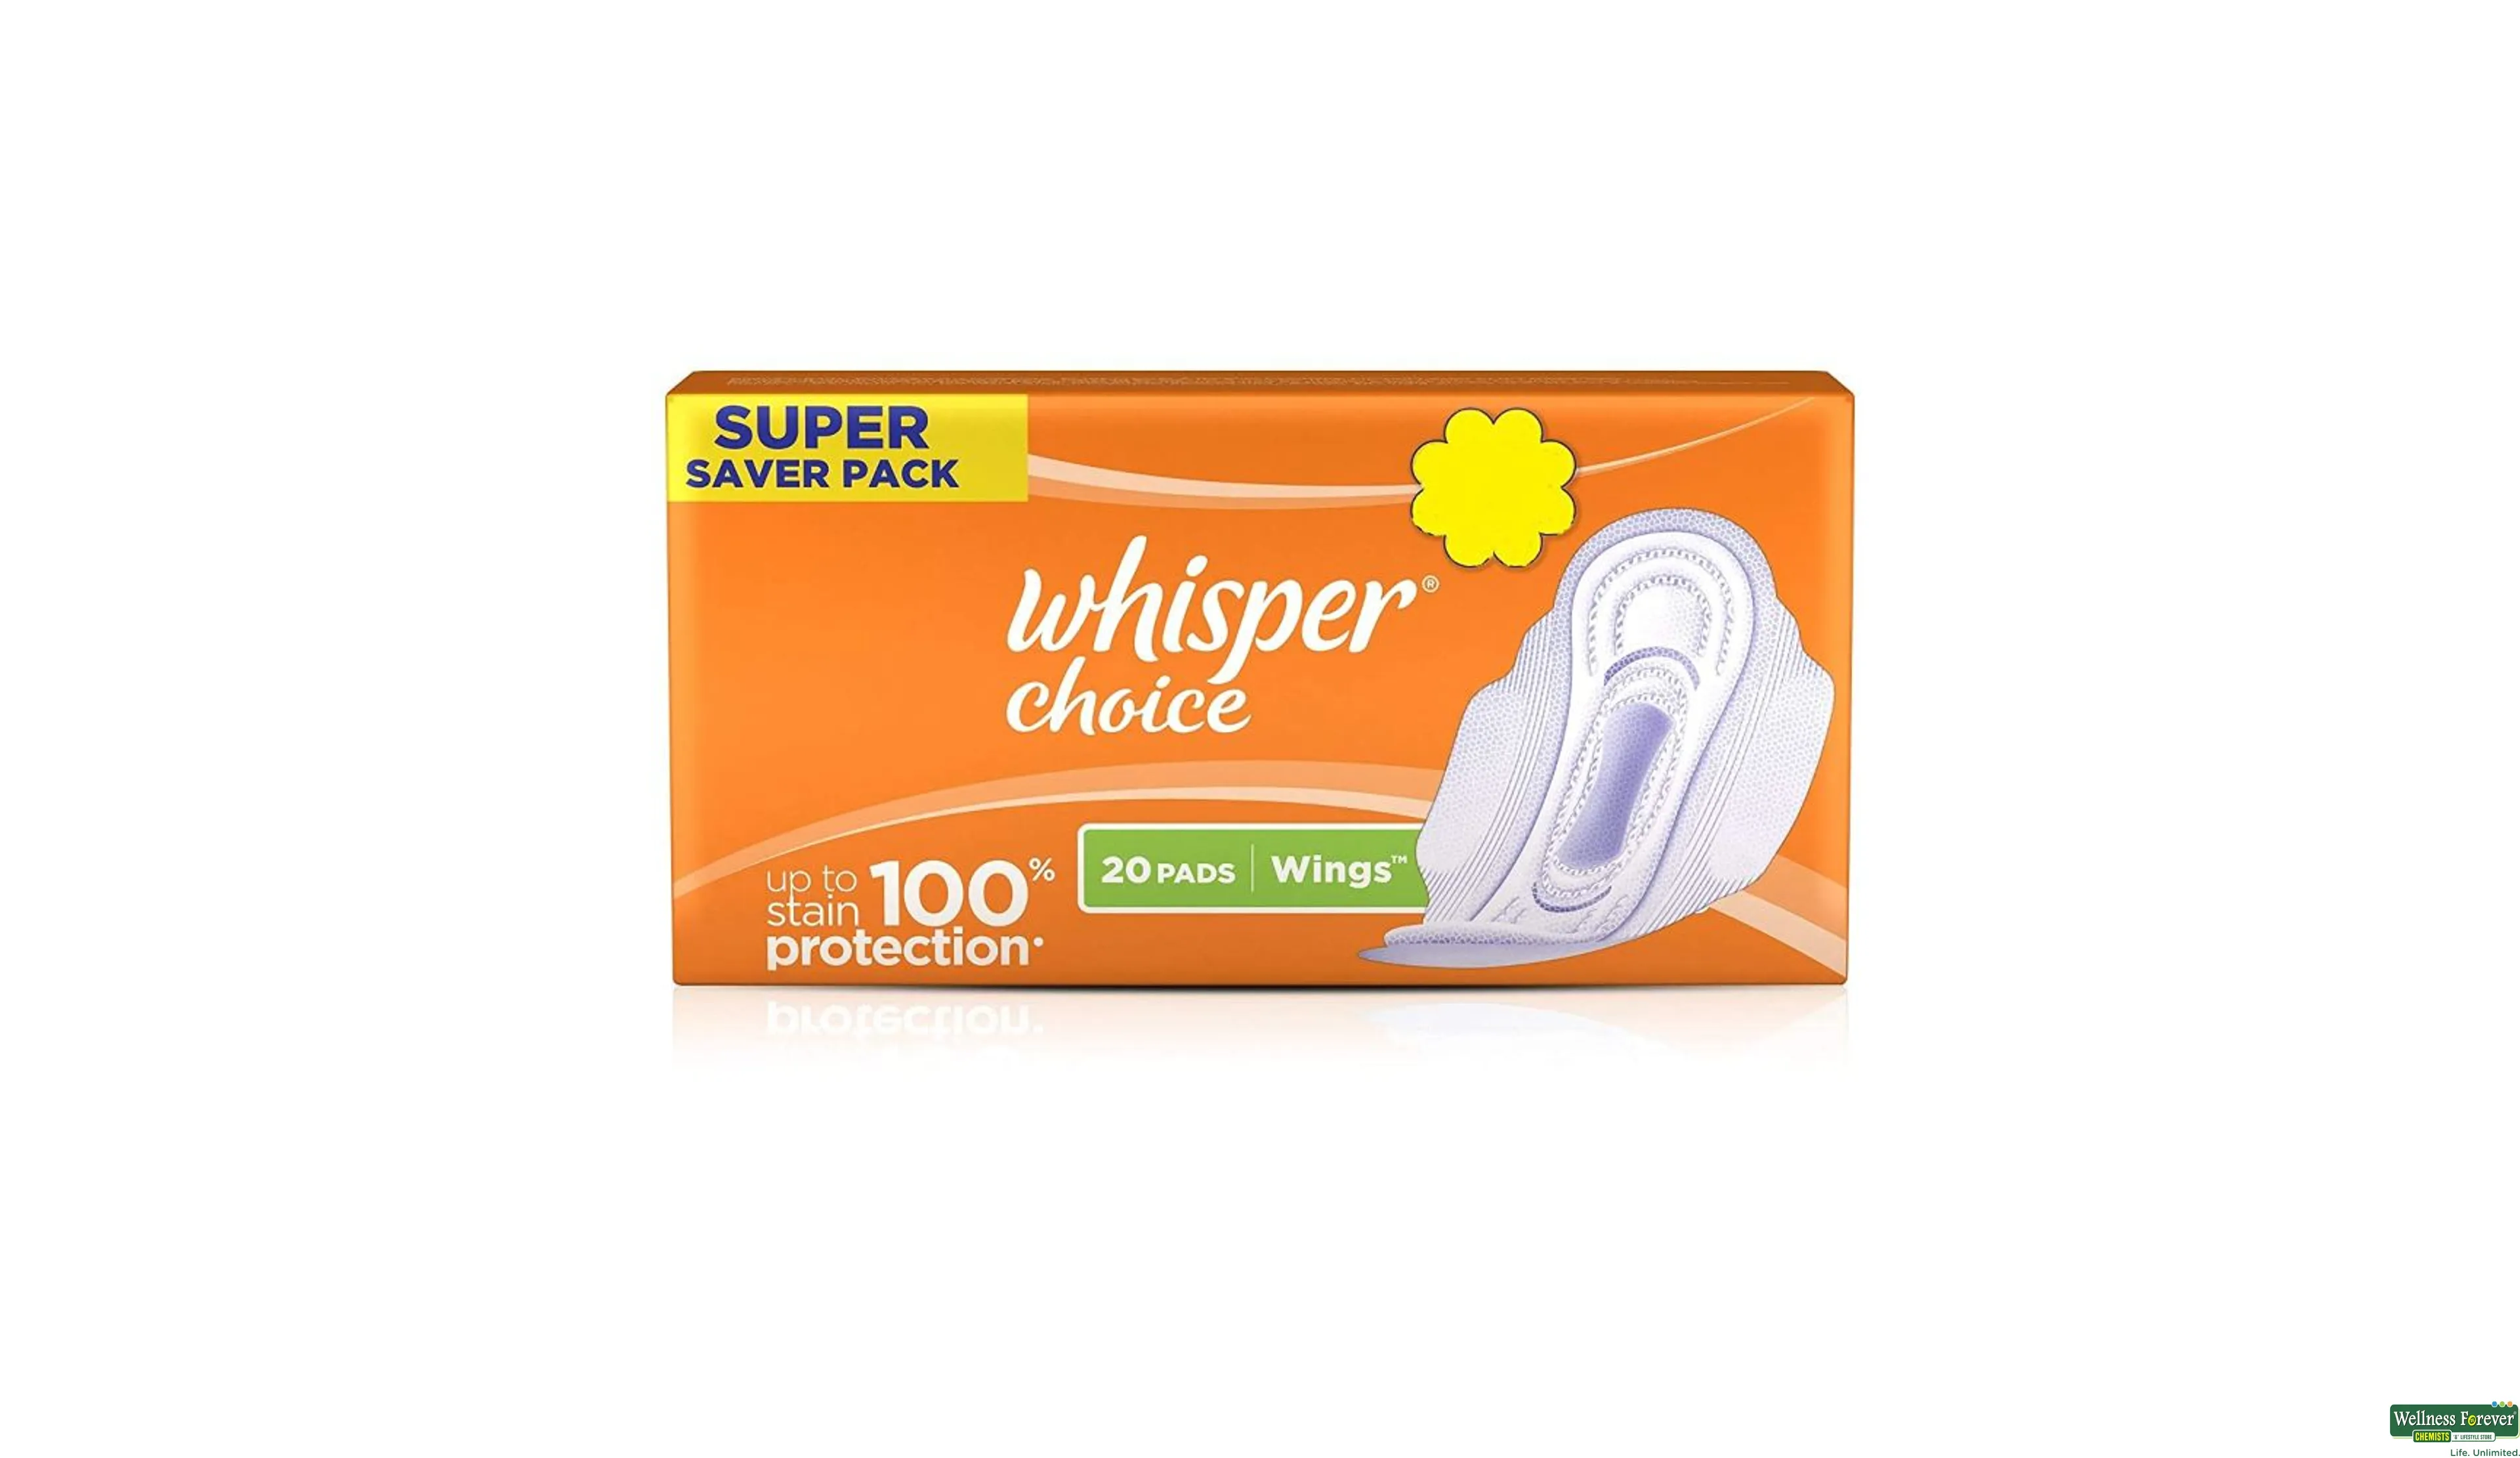 Buy Whisper bindazzz nights period panty 6+20 Whisper choice aloe